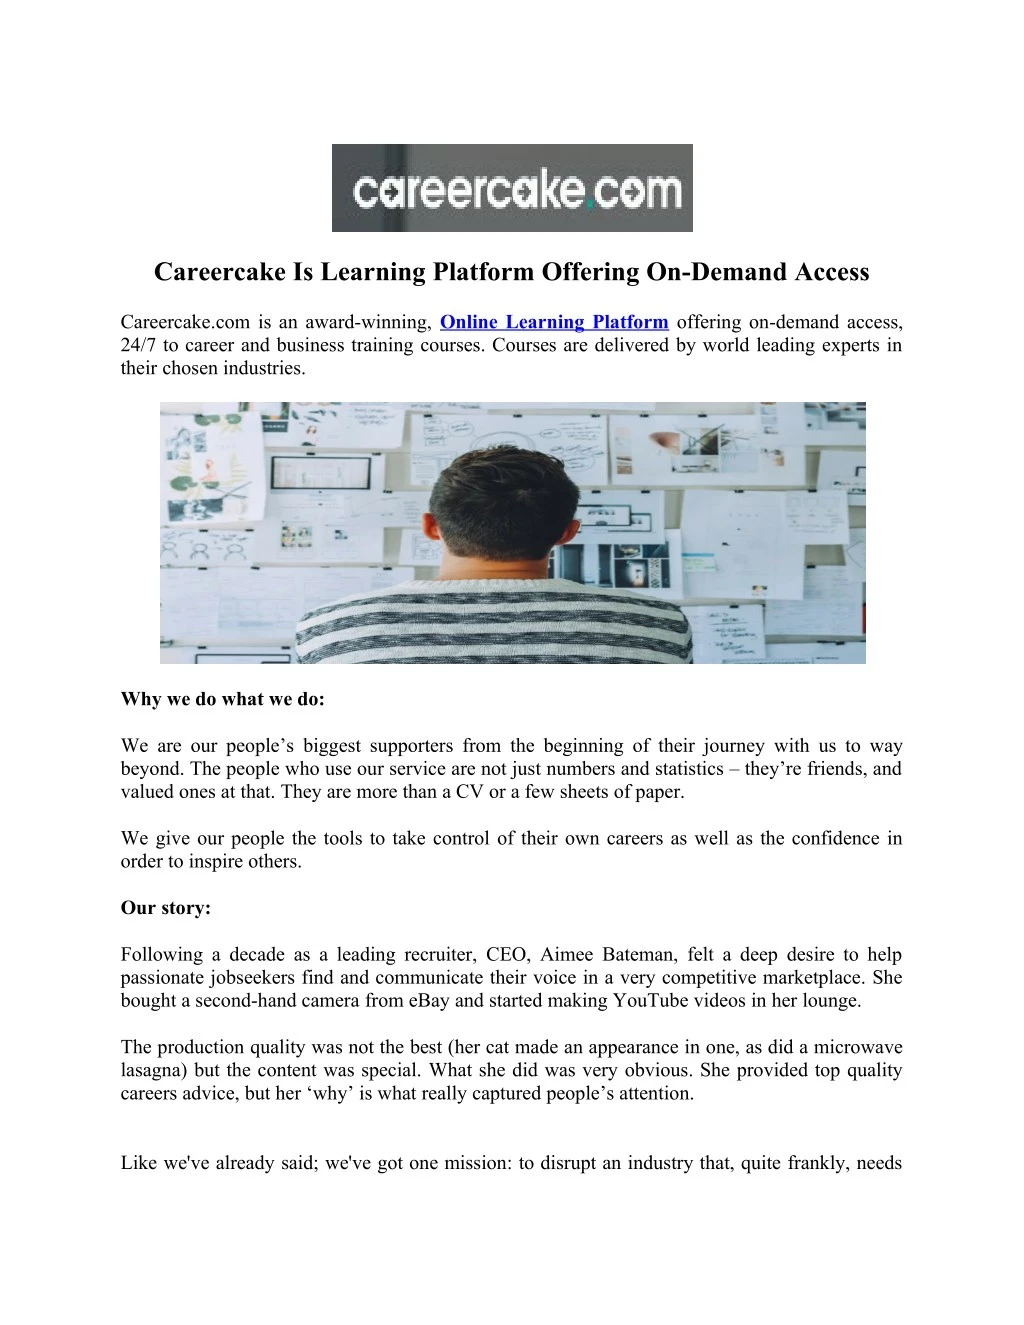 careercake is learning platform offering